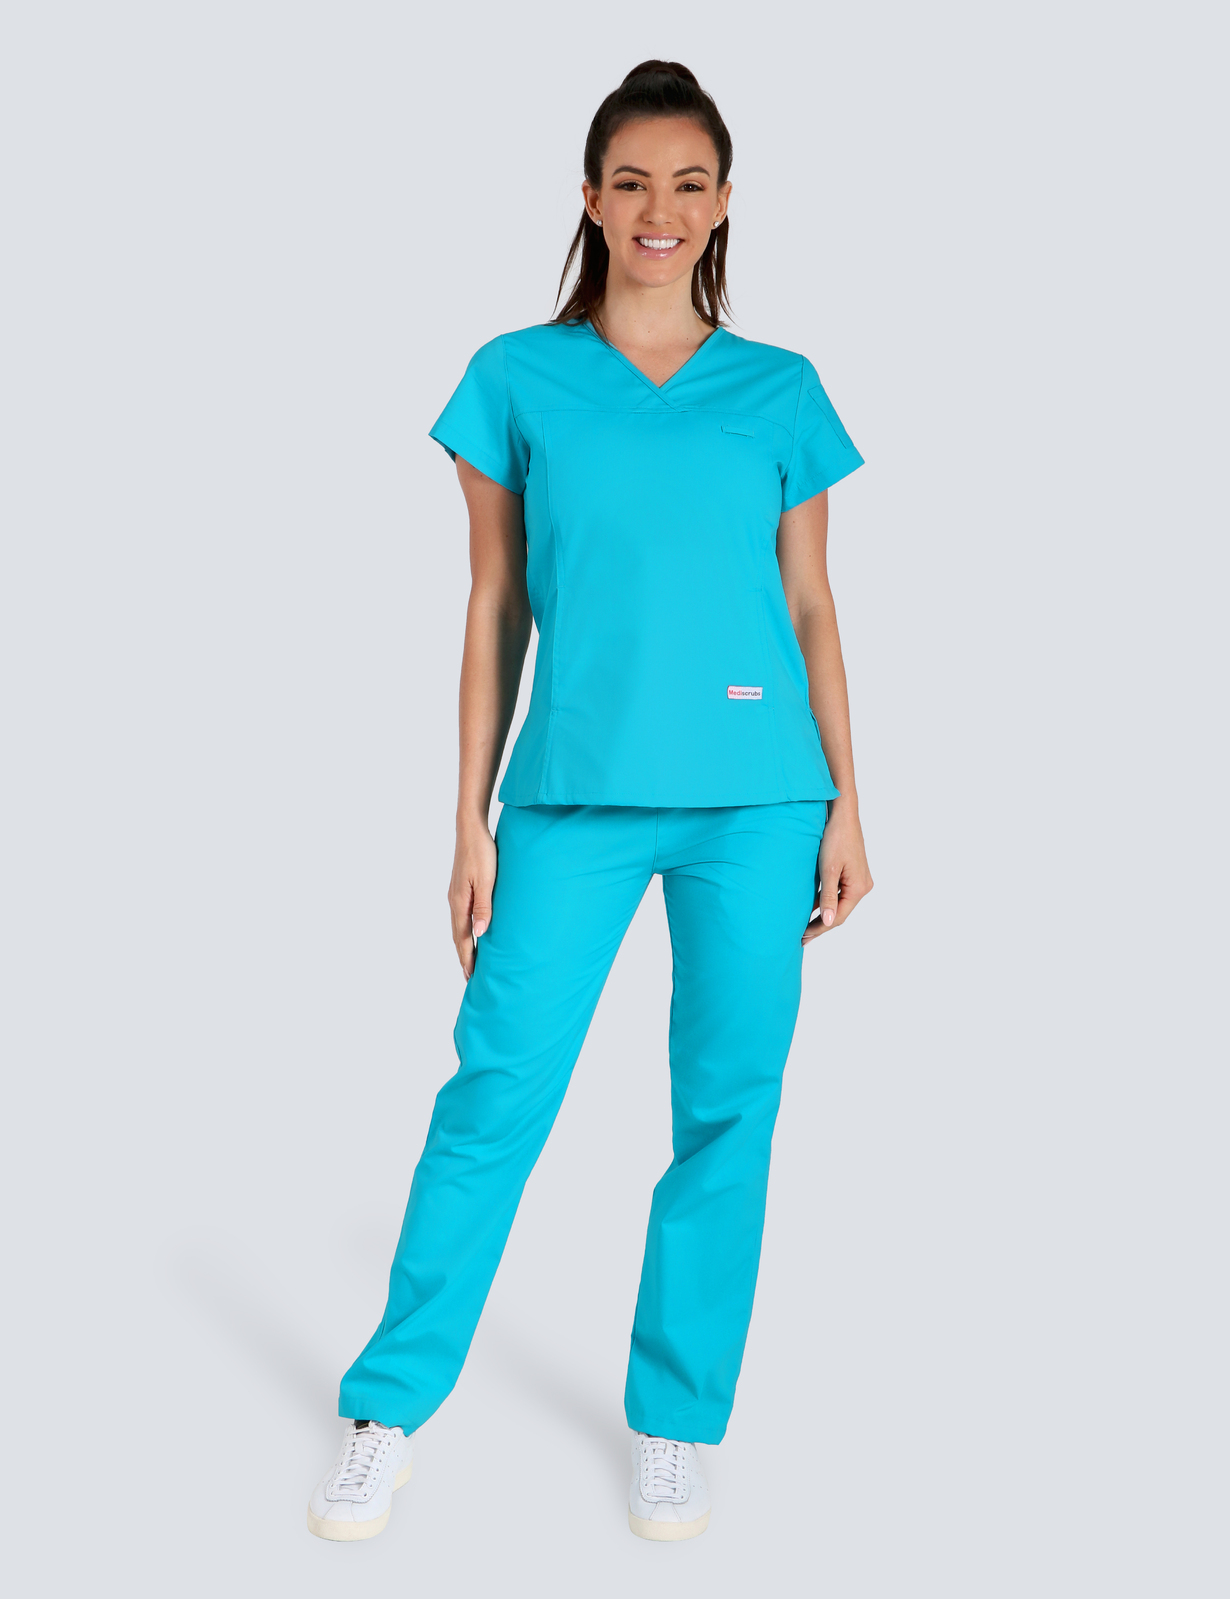 Caloundra Hospital - Enrolled Nurse (Women's Fit Solid Scrub Top and Cargo Pants in Aqua incl Logos)